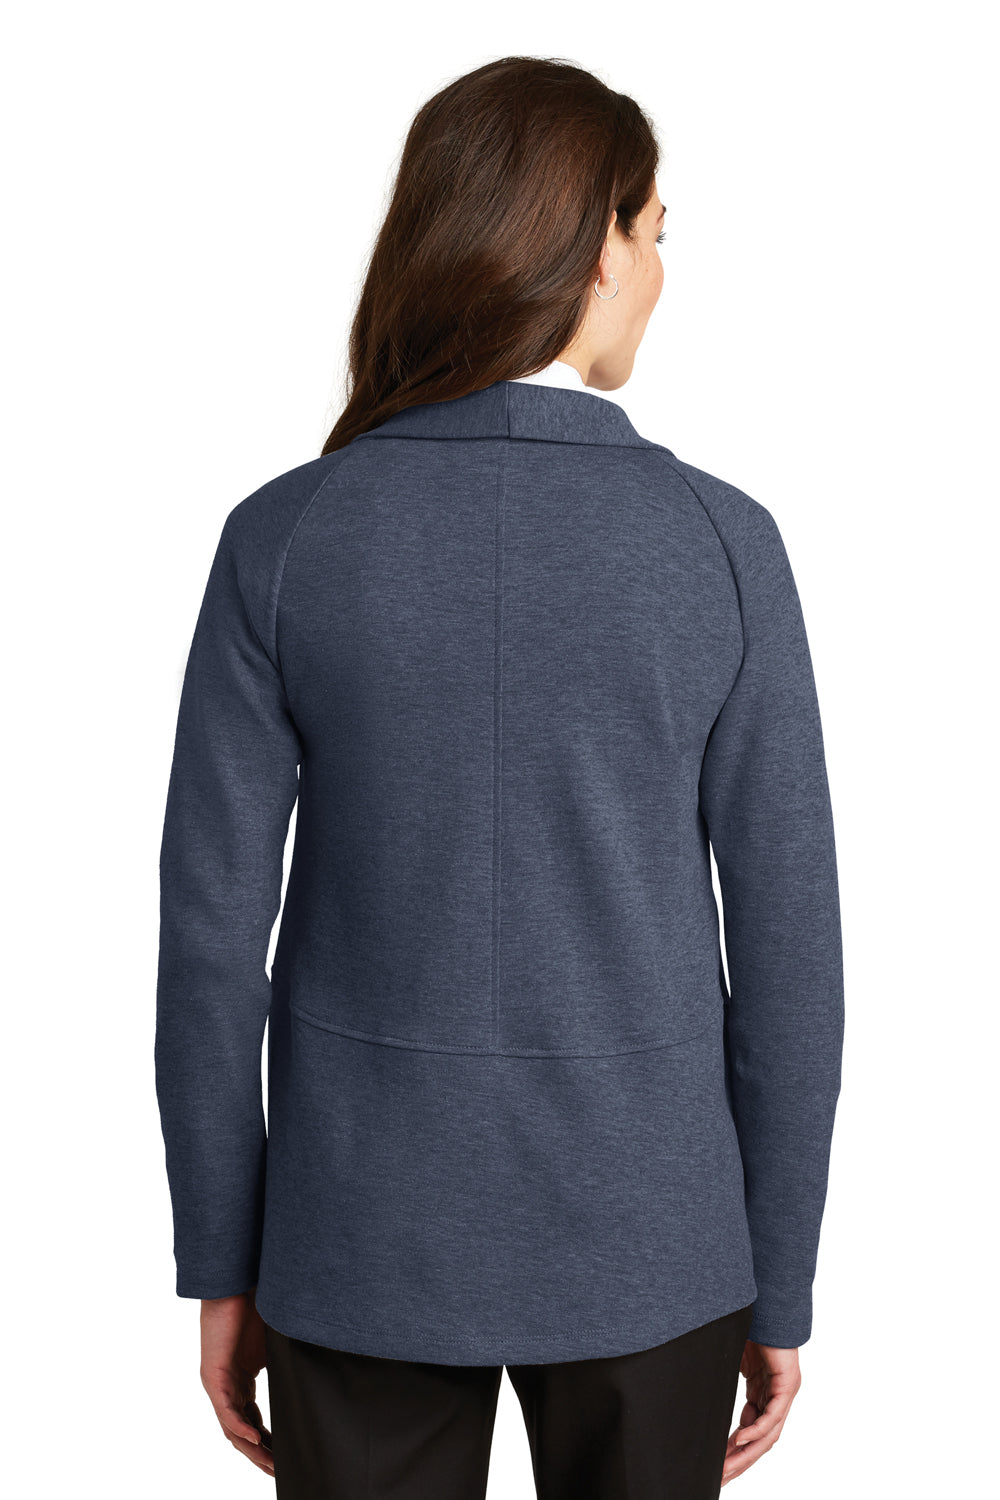 Port Authority L807 Womens Long Sleeve Cardigan Sweater Heather Blue Back